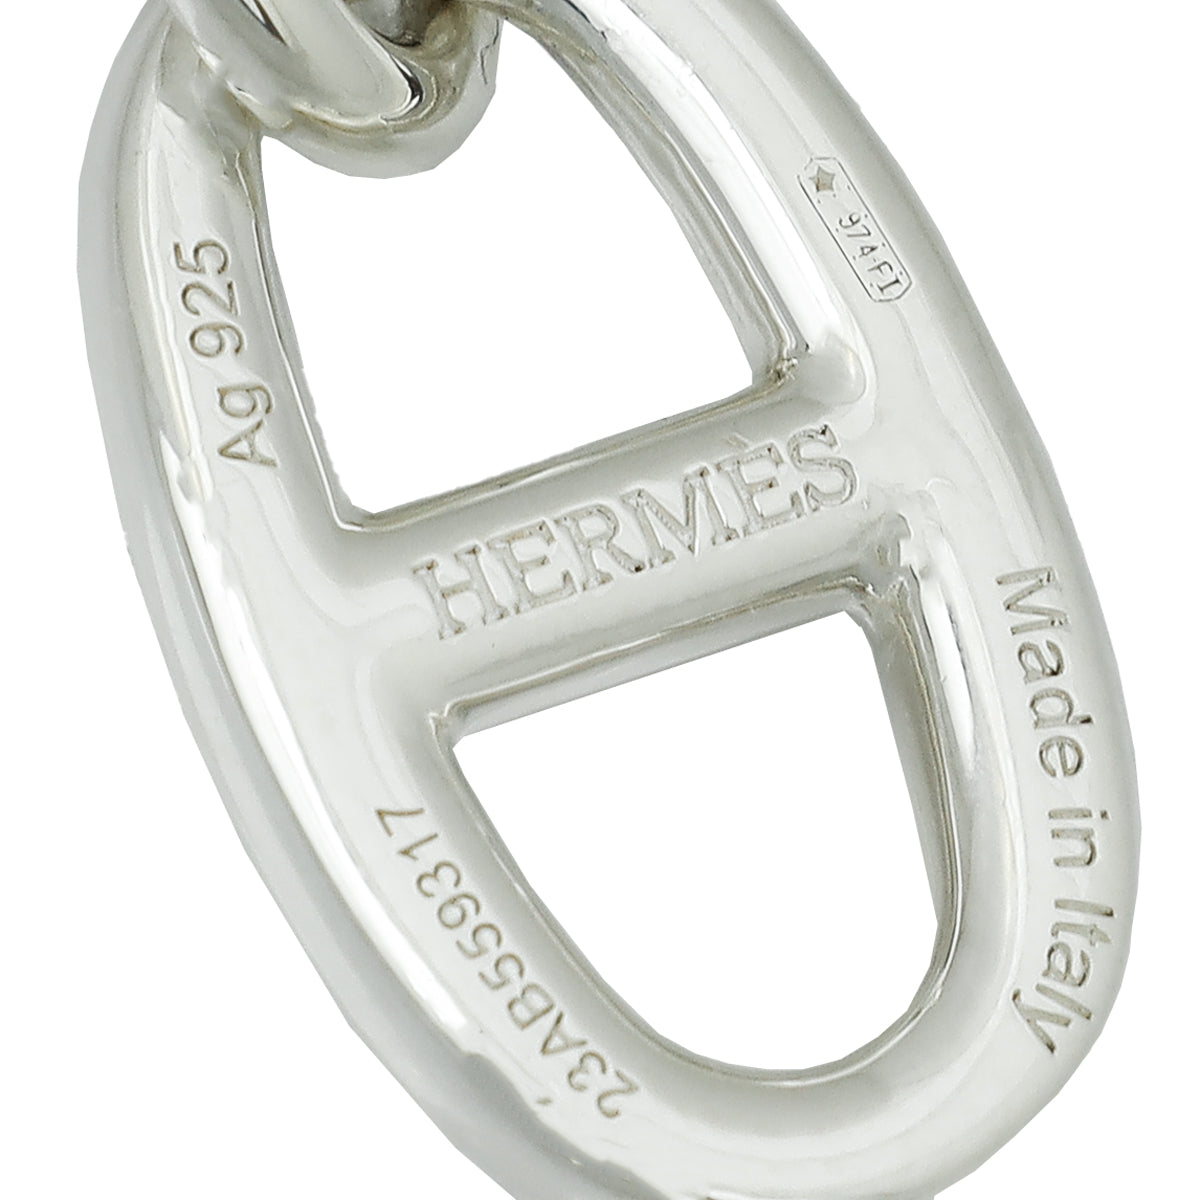 Hermes Silver Chaine D'Ancre Pendant Necklace